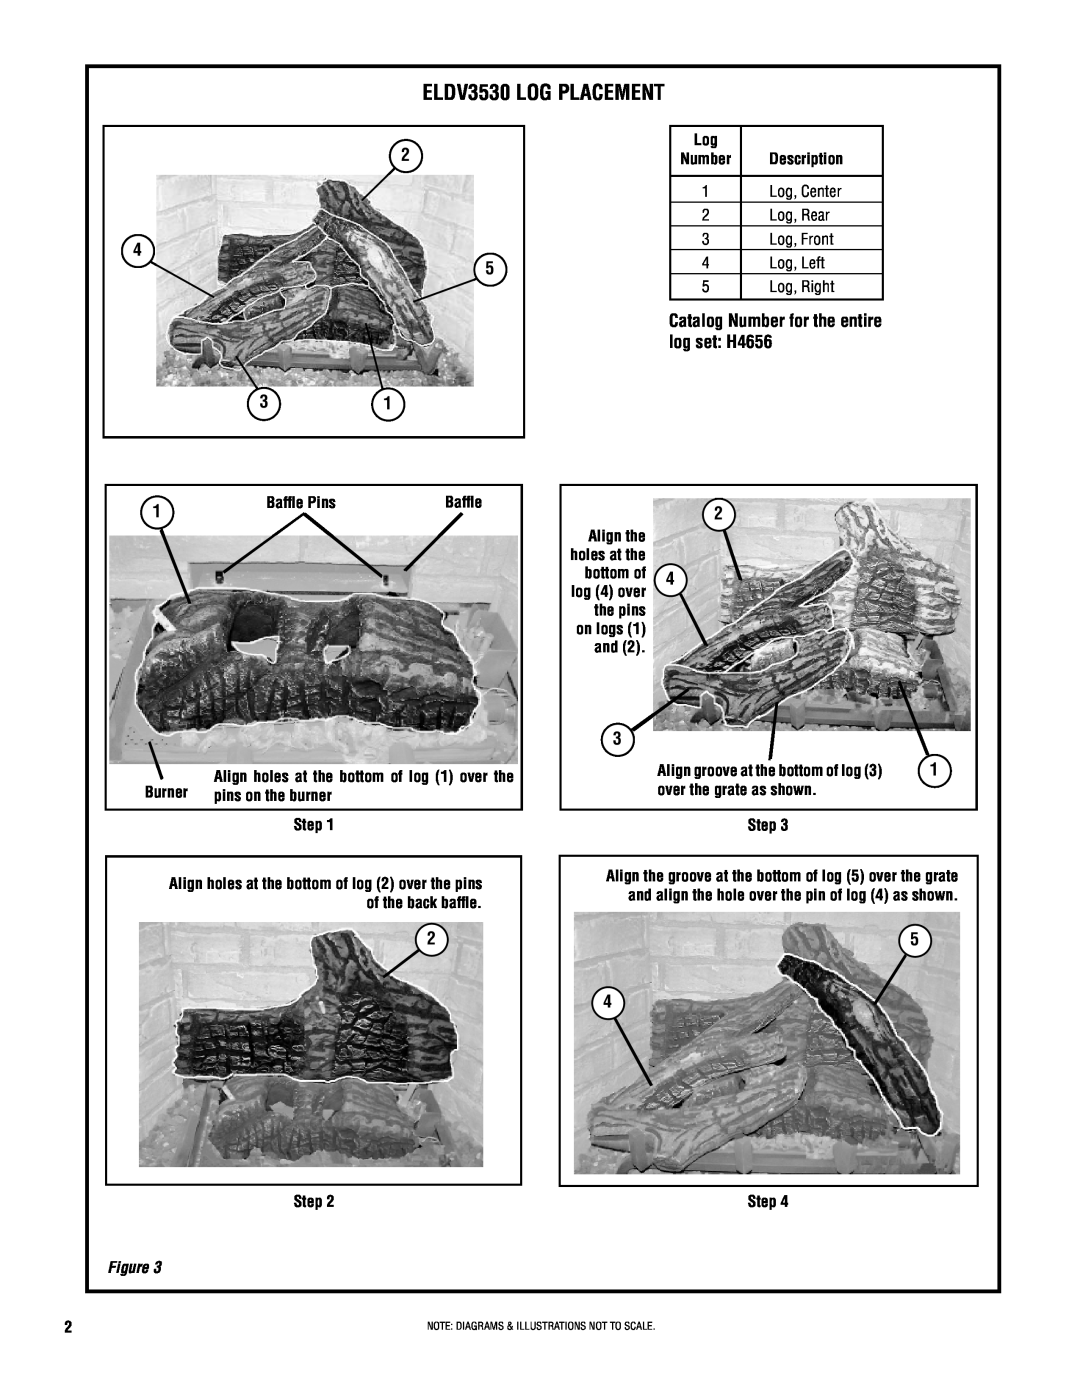 Lennox Hearth ELDV4540, ELDV4035 manual ELDV3530 Log Placement, Baffle Pins, Burner, pins on the burner, Step, Description 